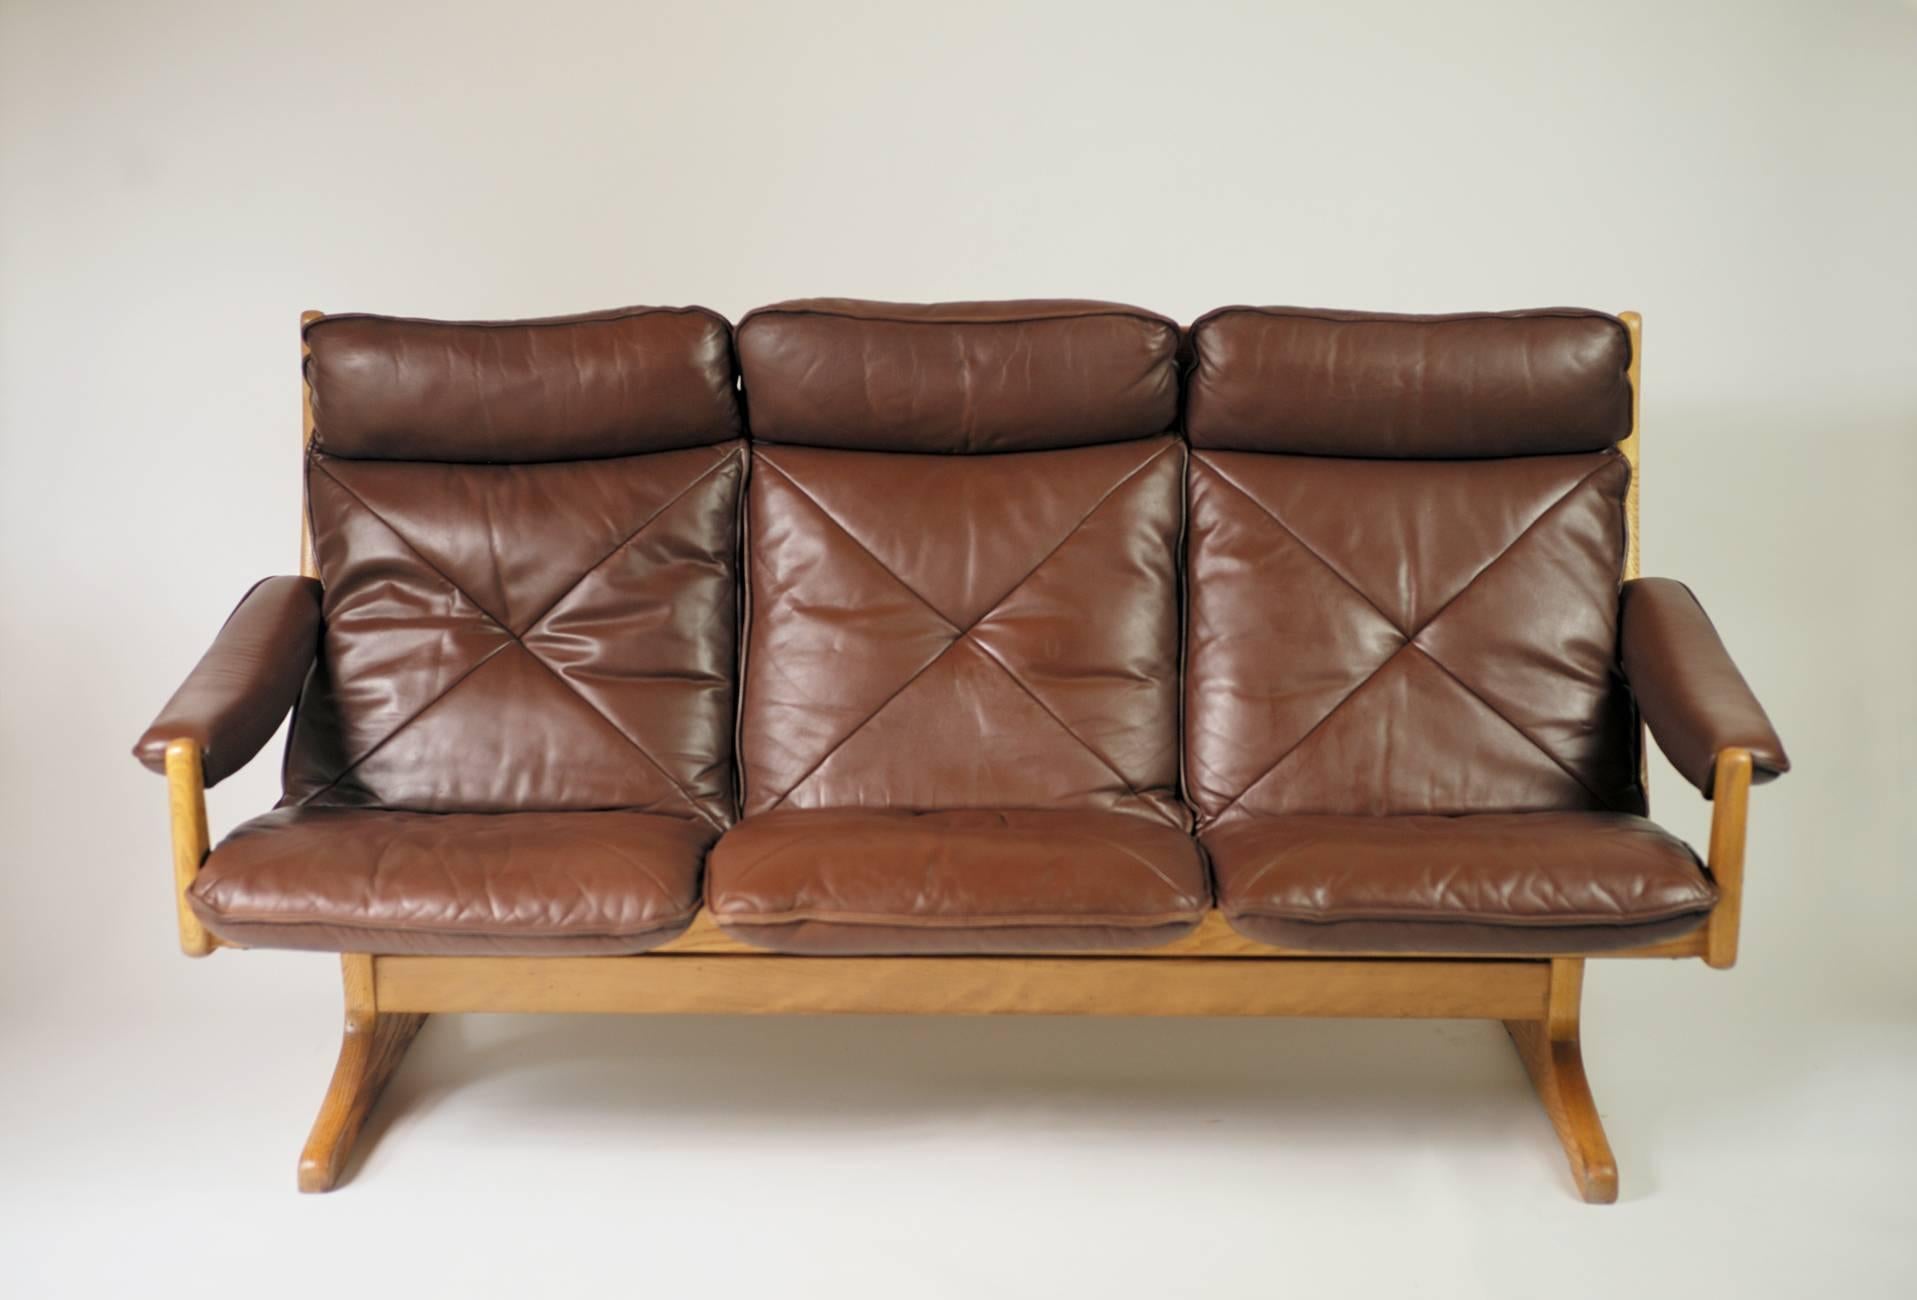 Leather Norwegian Three-Seat Sofa from Soda Galvano, 1960 For Sale